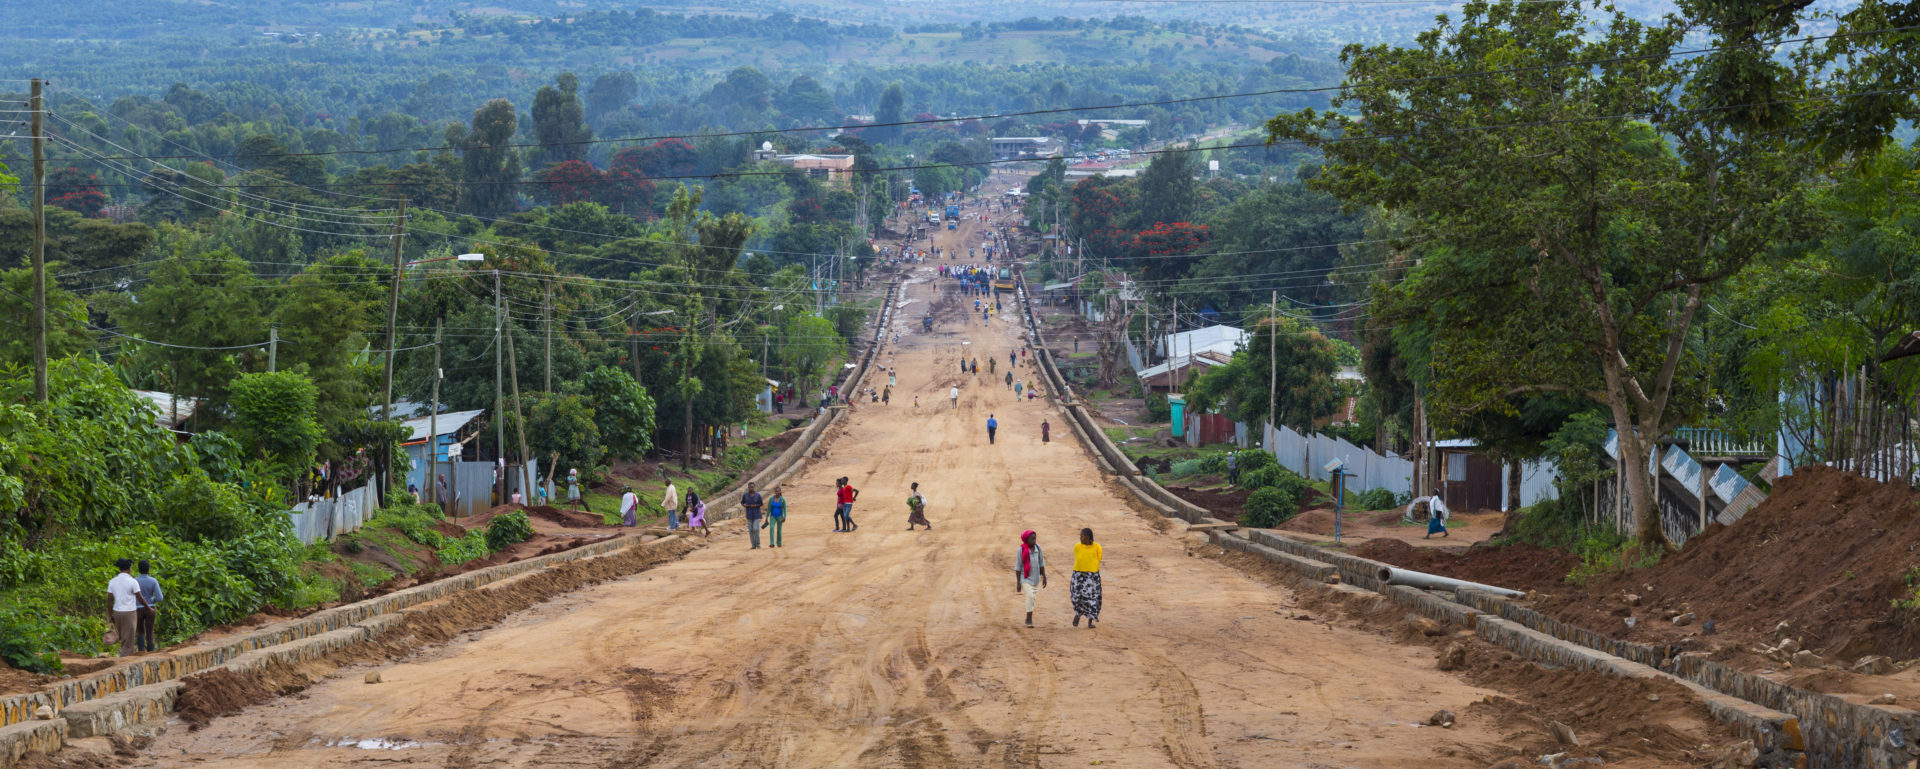 People walking down main road in Jinka town, Naciones, Ethiopia, Africa